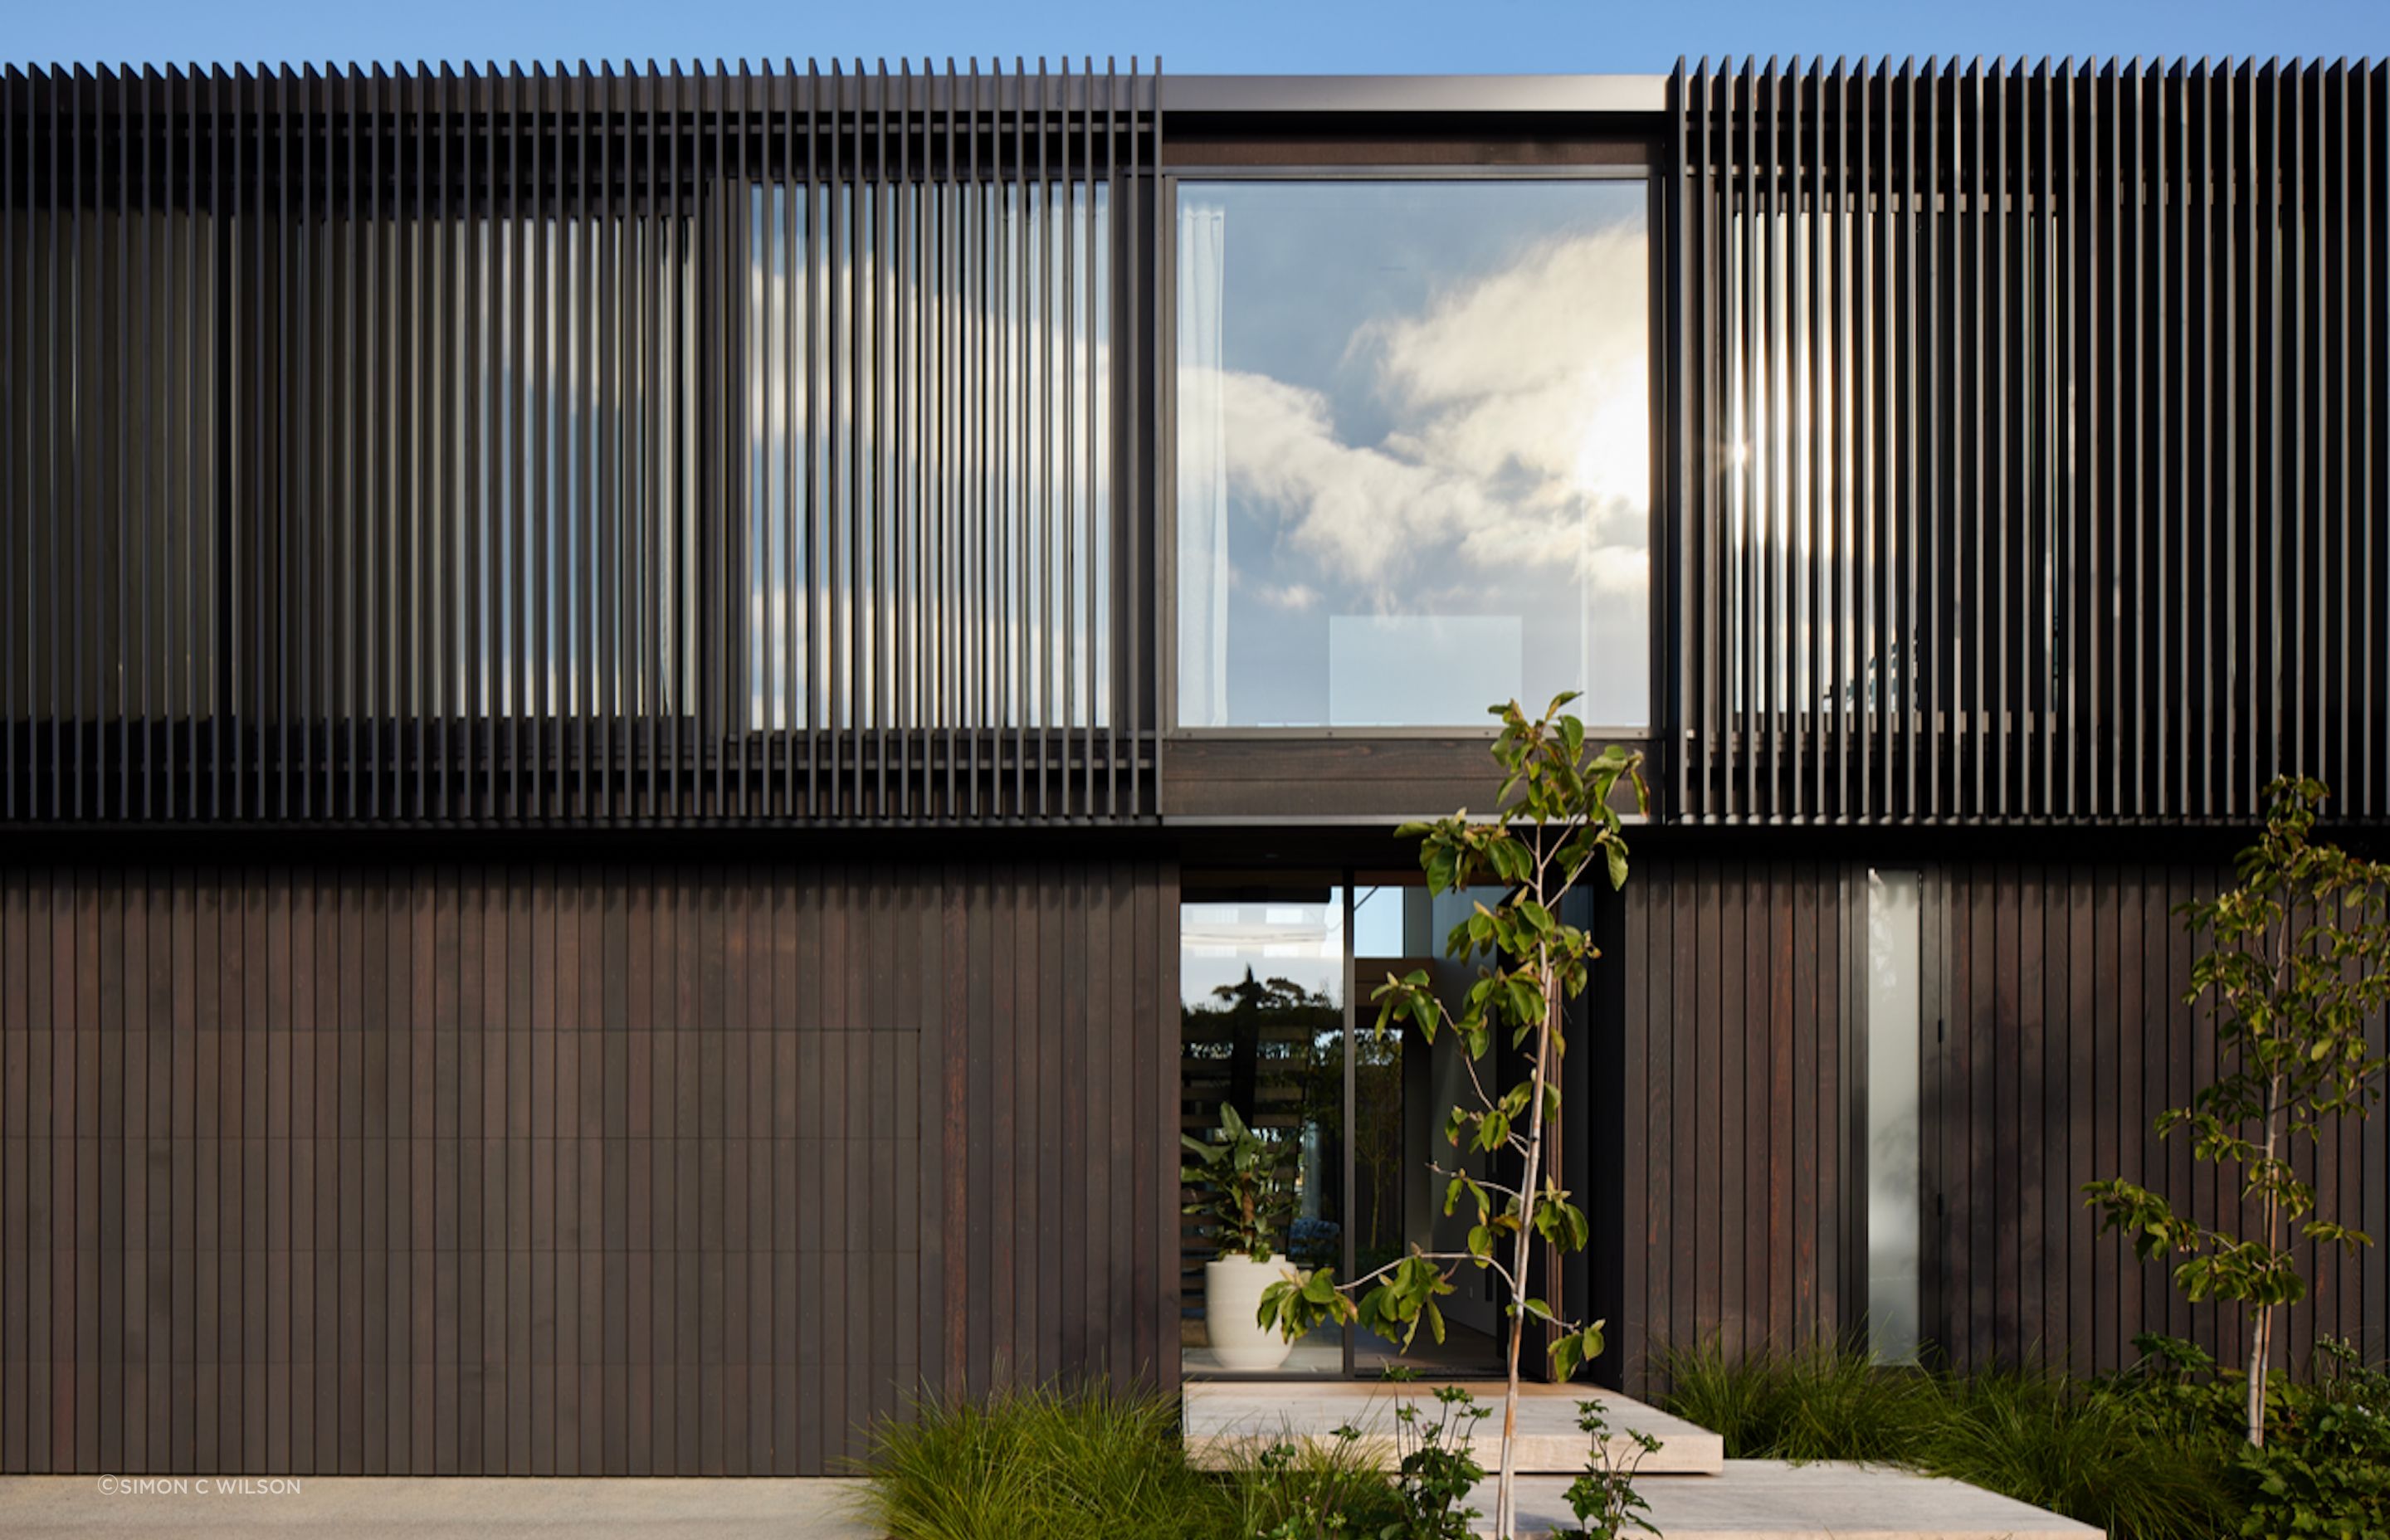 Vertical cedar cladding and aluminium fins create a dramatic visual.